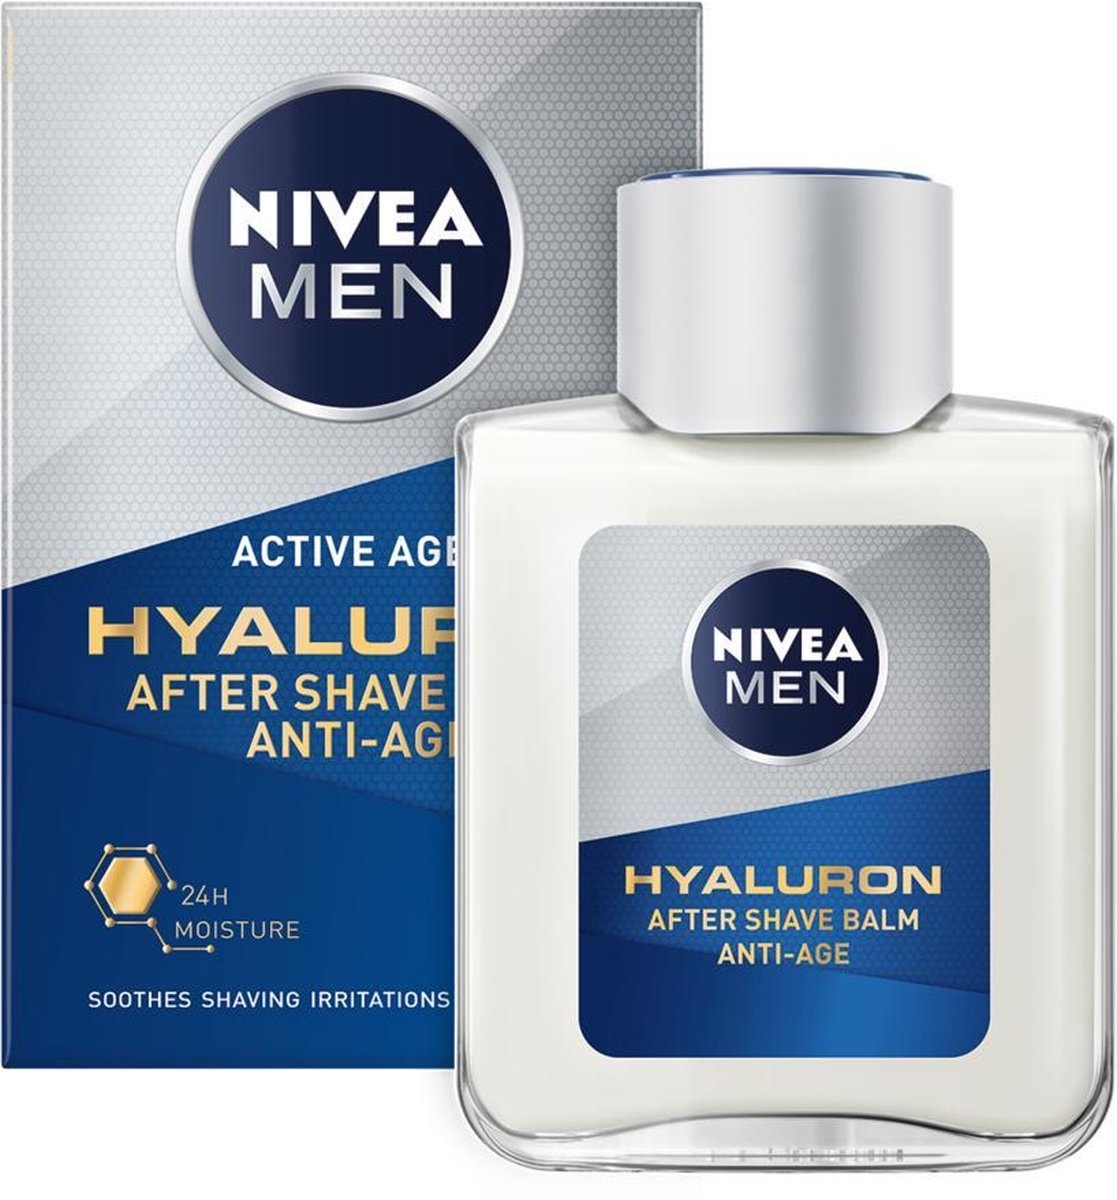 NIVEA MEN Anti-Age Hyaluronic Acid After Shave Balm - 100ml - Emballage endommagé